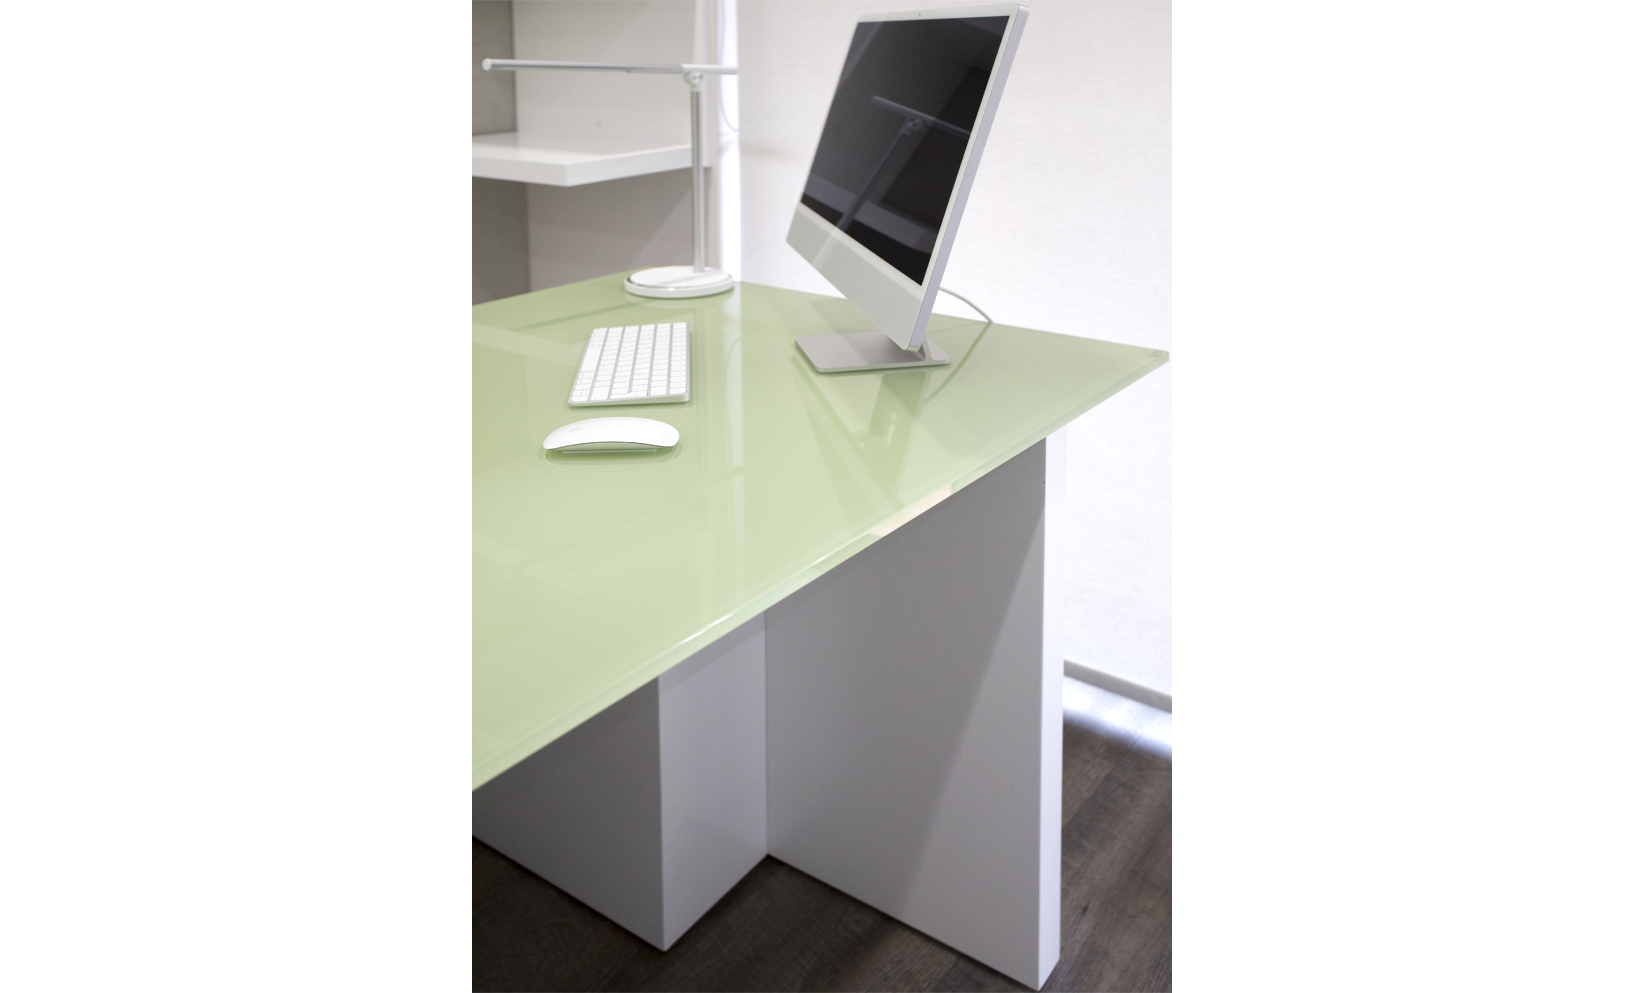 9-interior-design-medical-office-shelves-desk-glass-green-marmorino-details